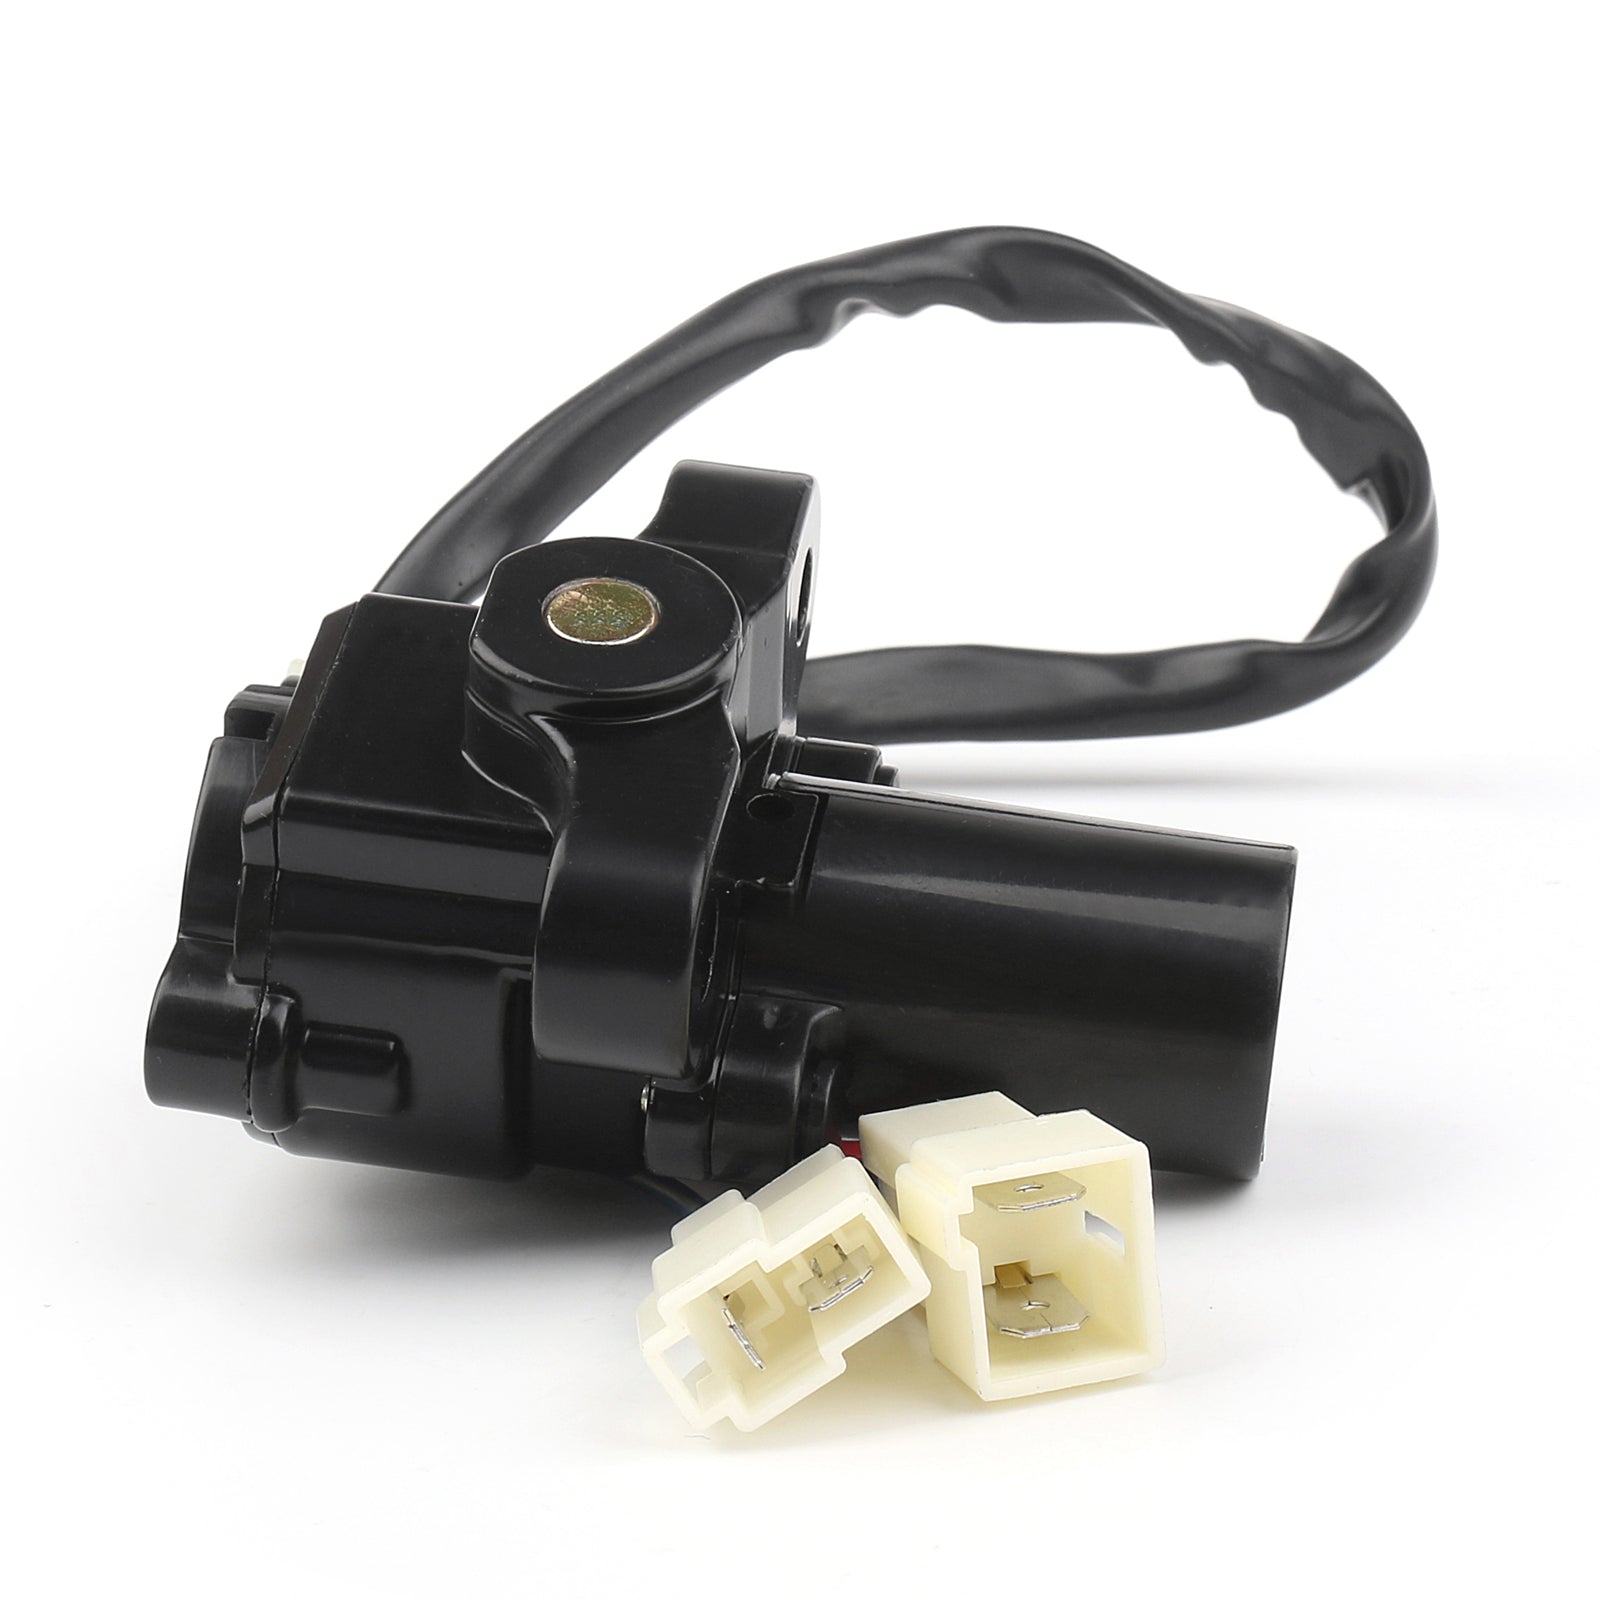 Ignition Switch Seat Gas Cap Cover Lock Key Set For Yamaha XVS1300CU XVS1300